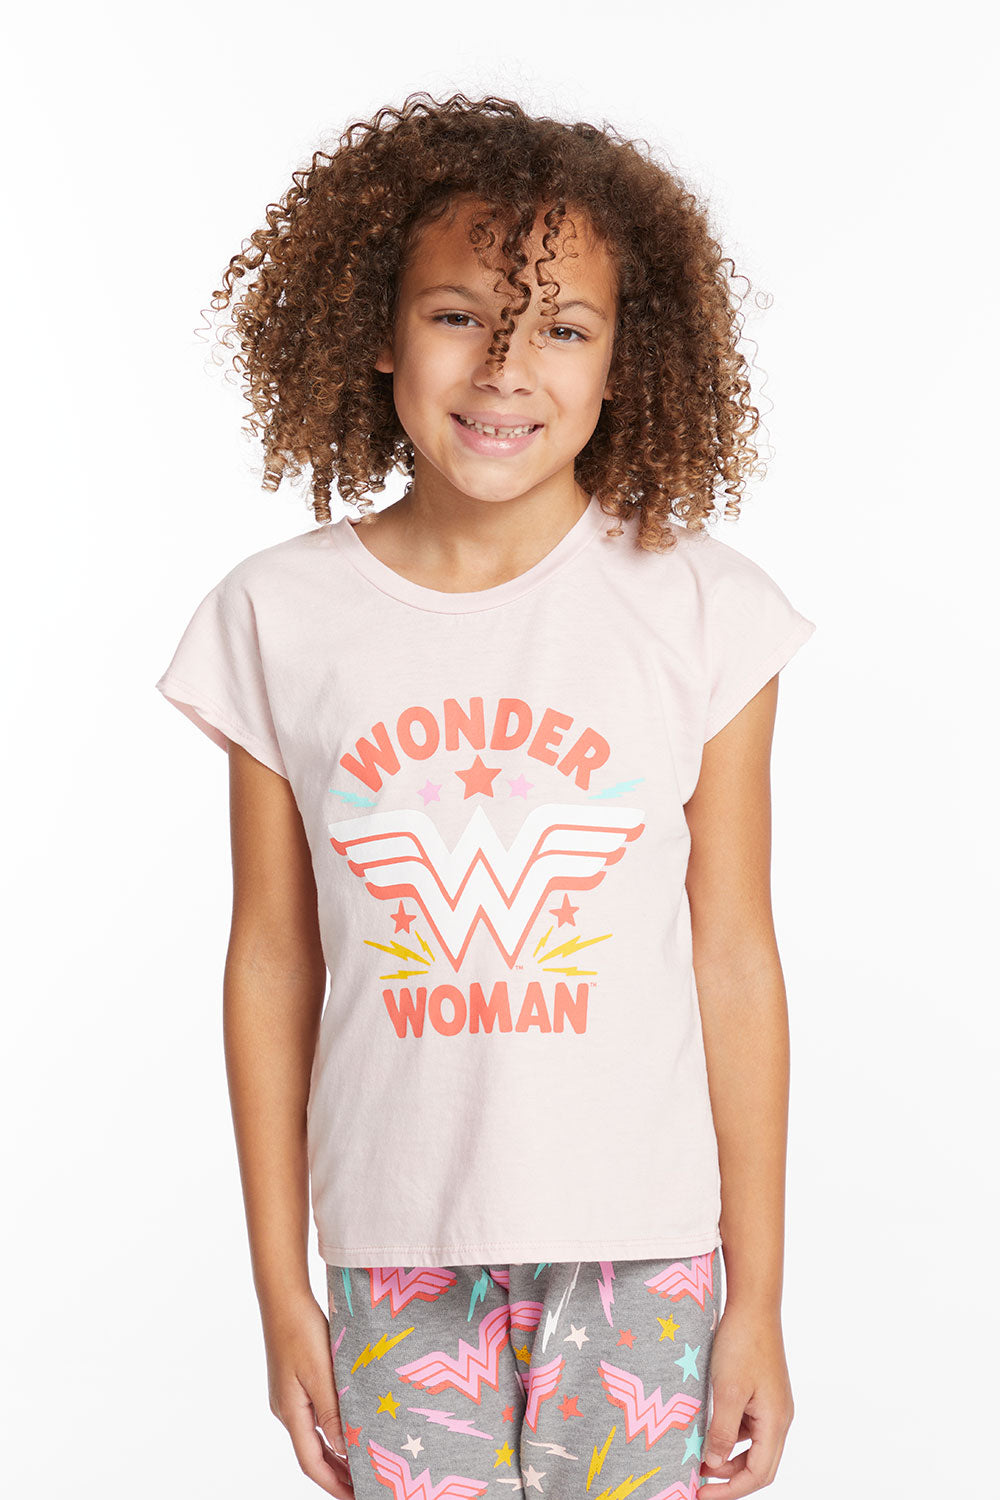 Wonder Woman Retro Logo Girls Tee GIRLS chaserbrand